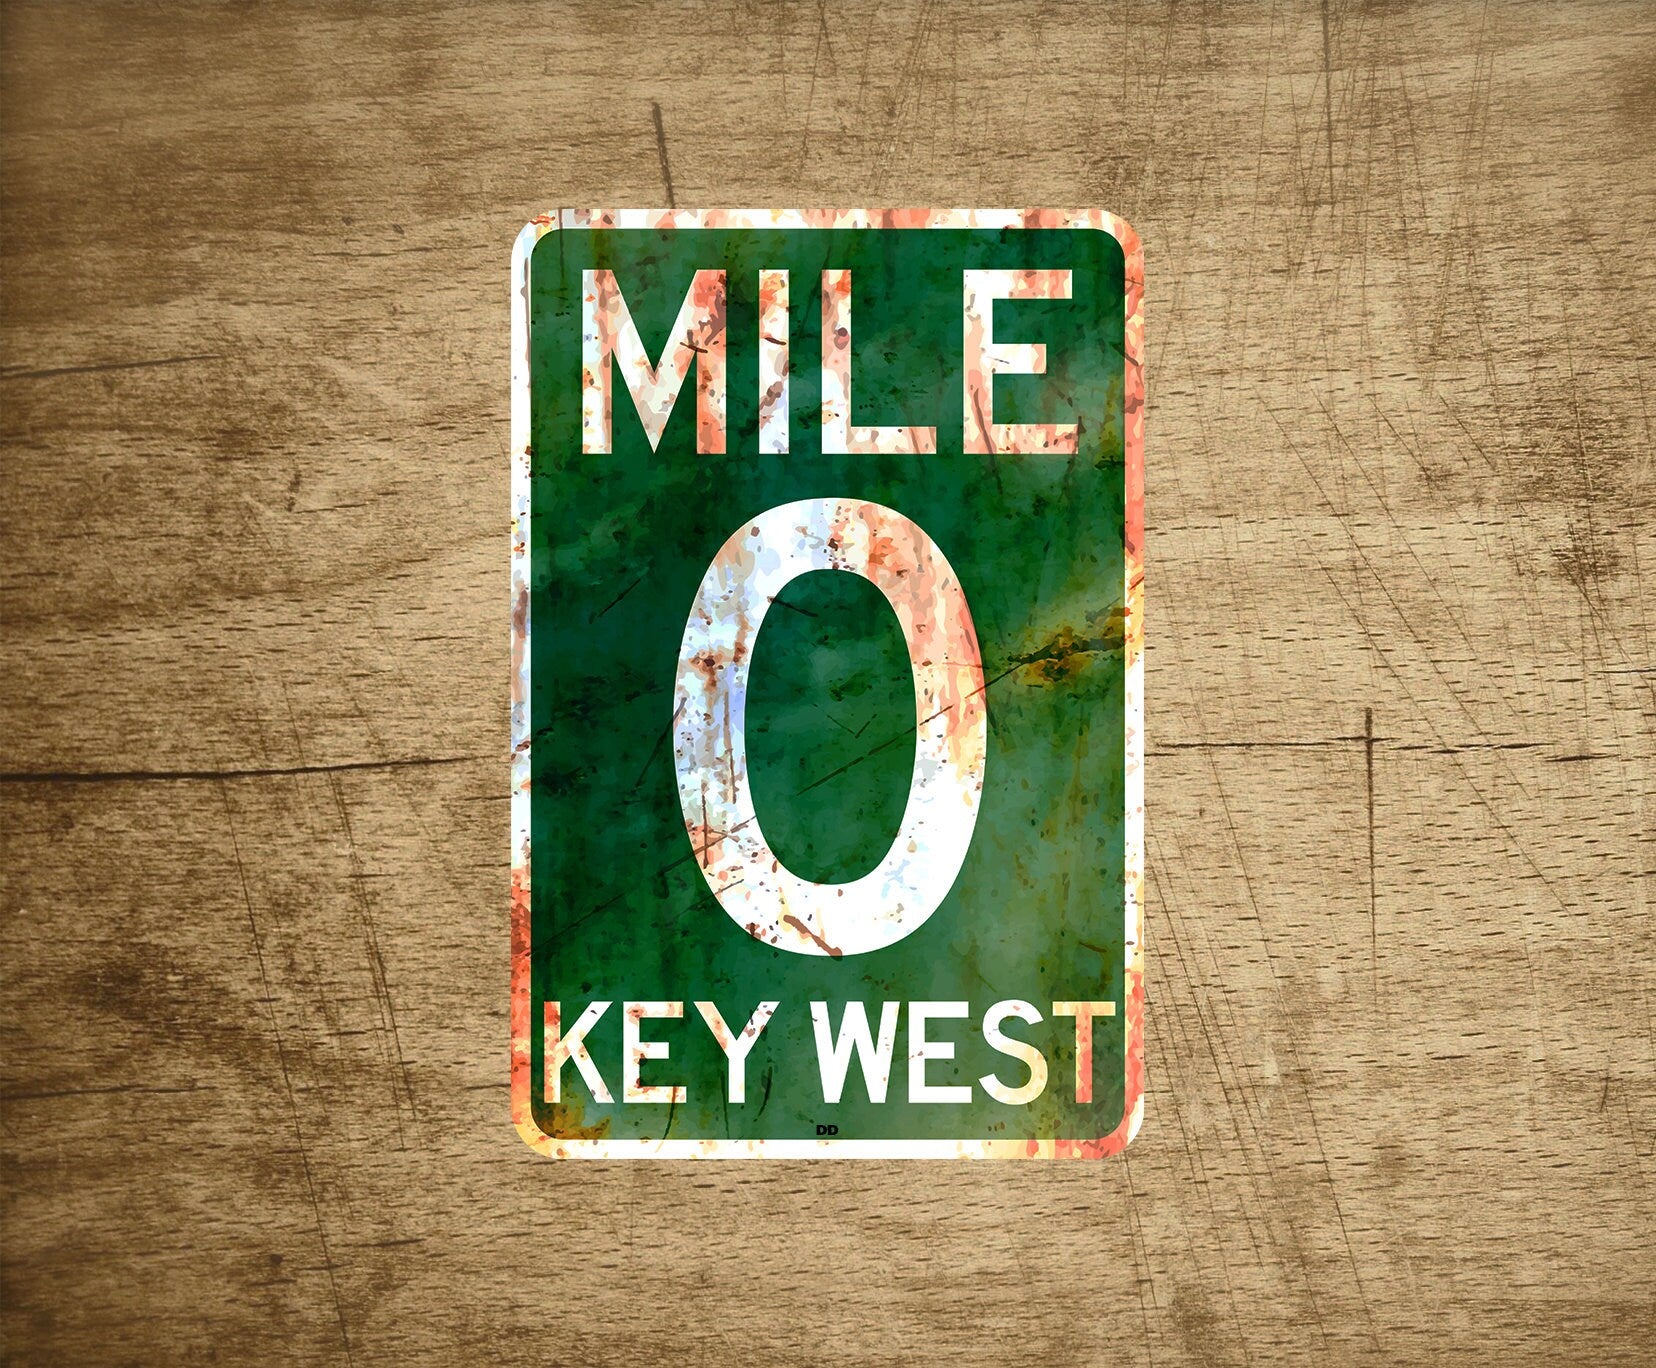 Key West Mile 0 Decal Sticker Atlantic Ocean Florida A1A Vinyl Rusted Look 3" x4"